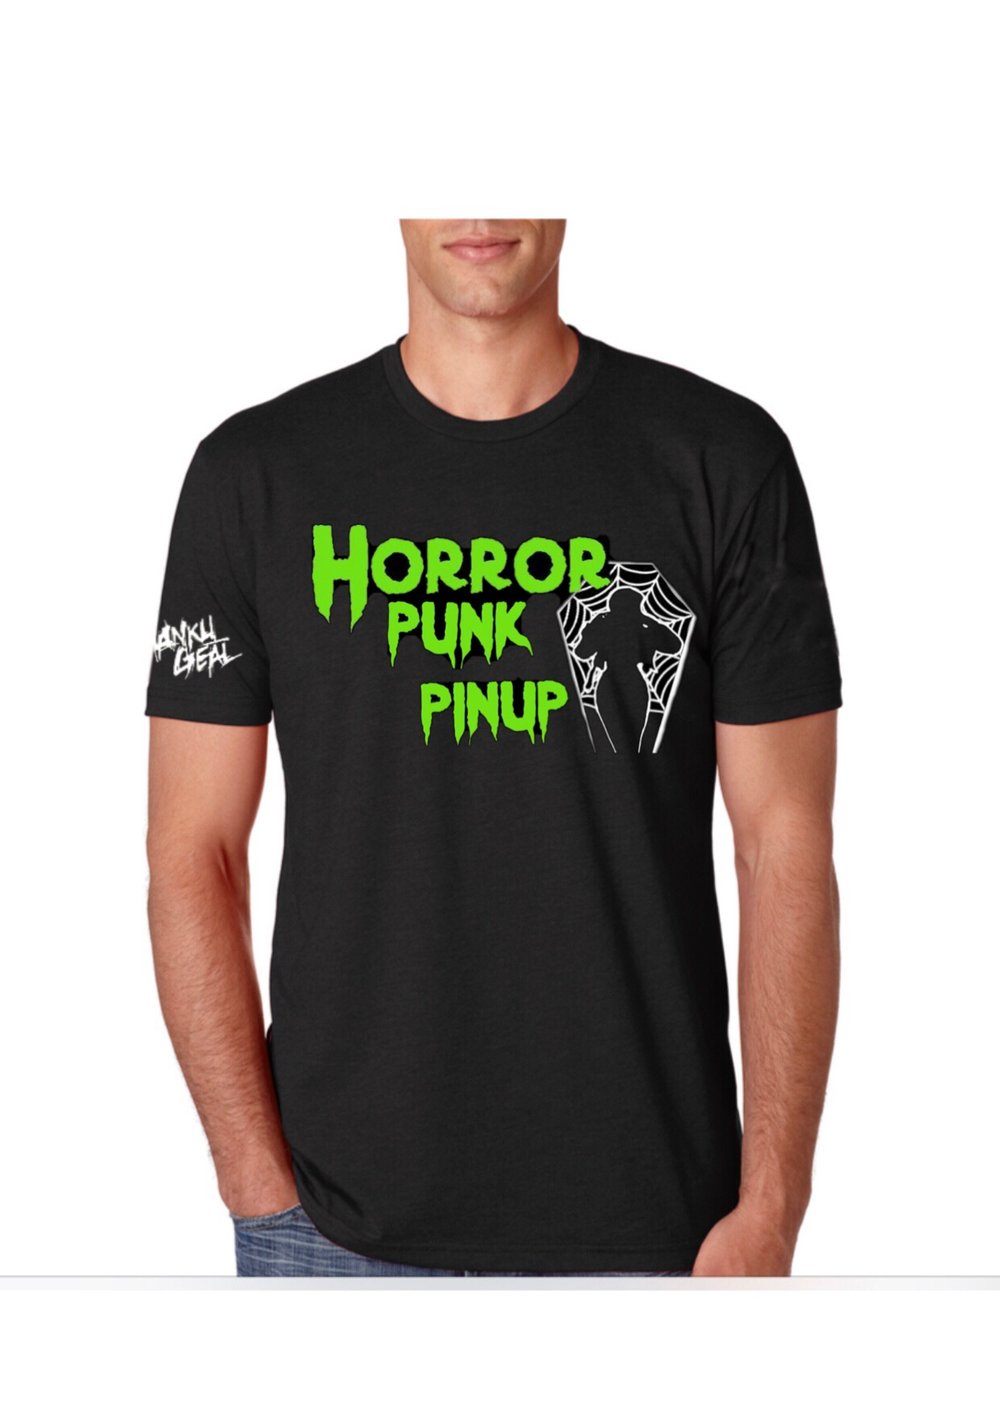 Horror Punk Pinup Mens Tee